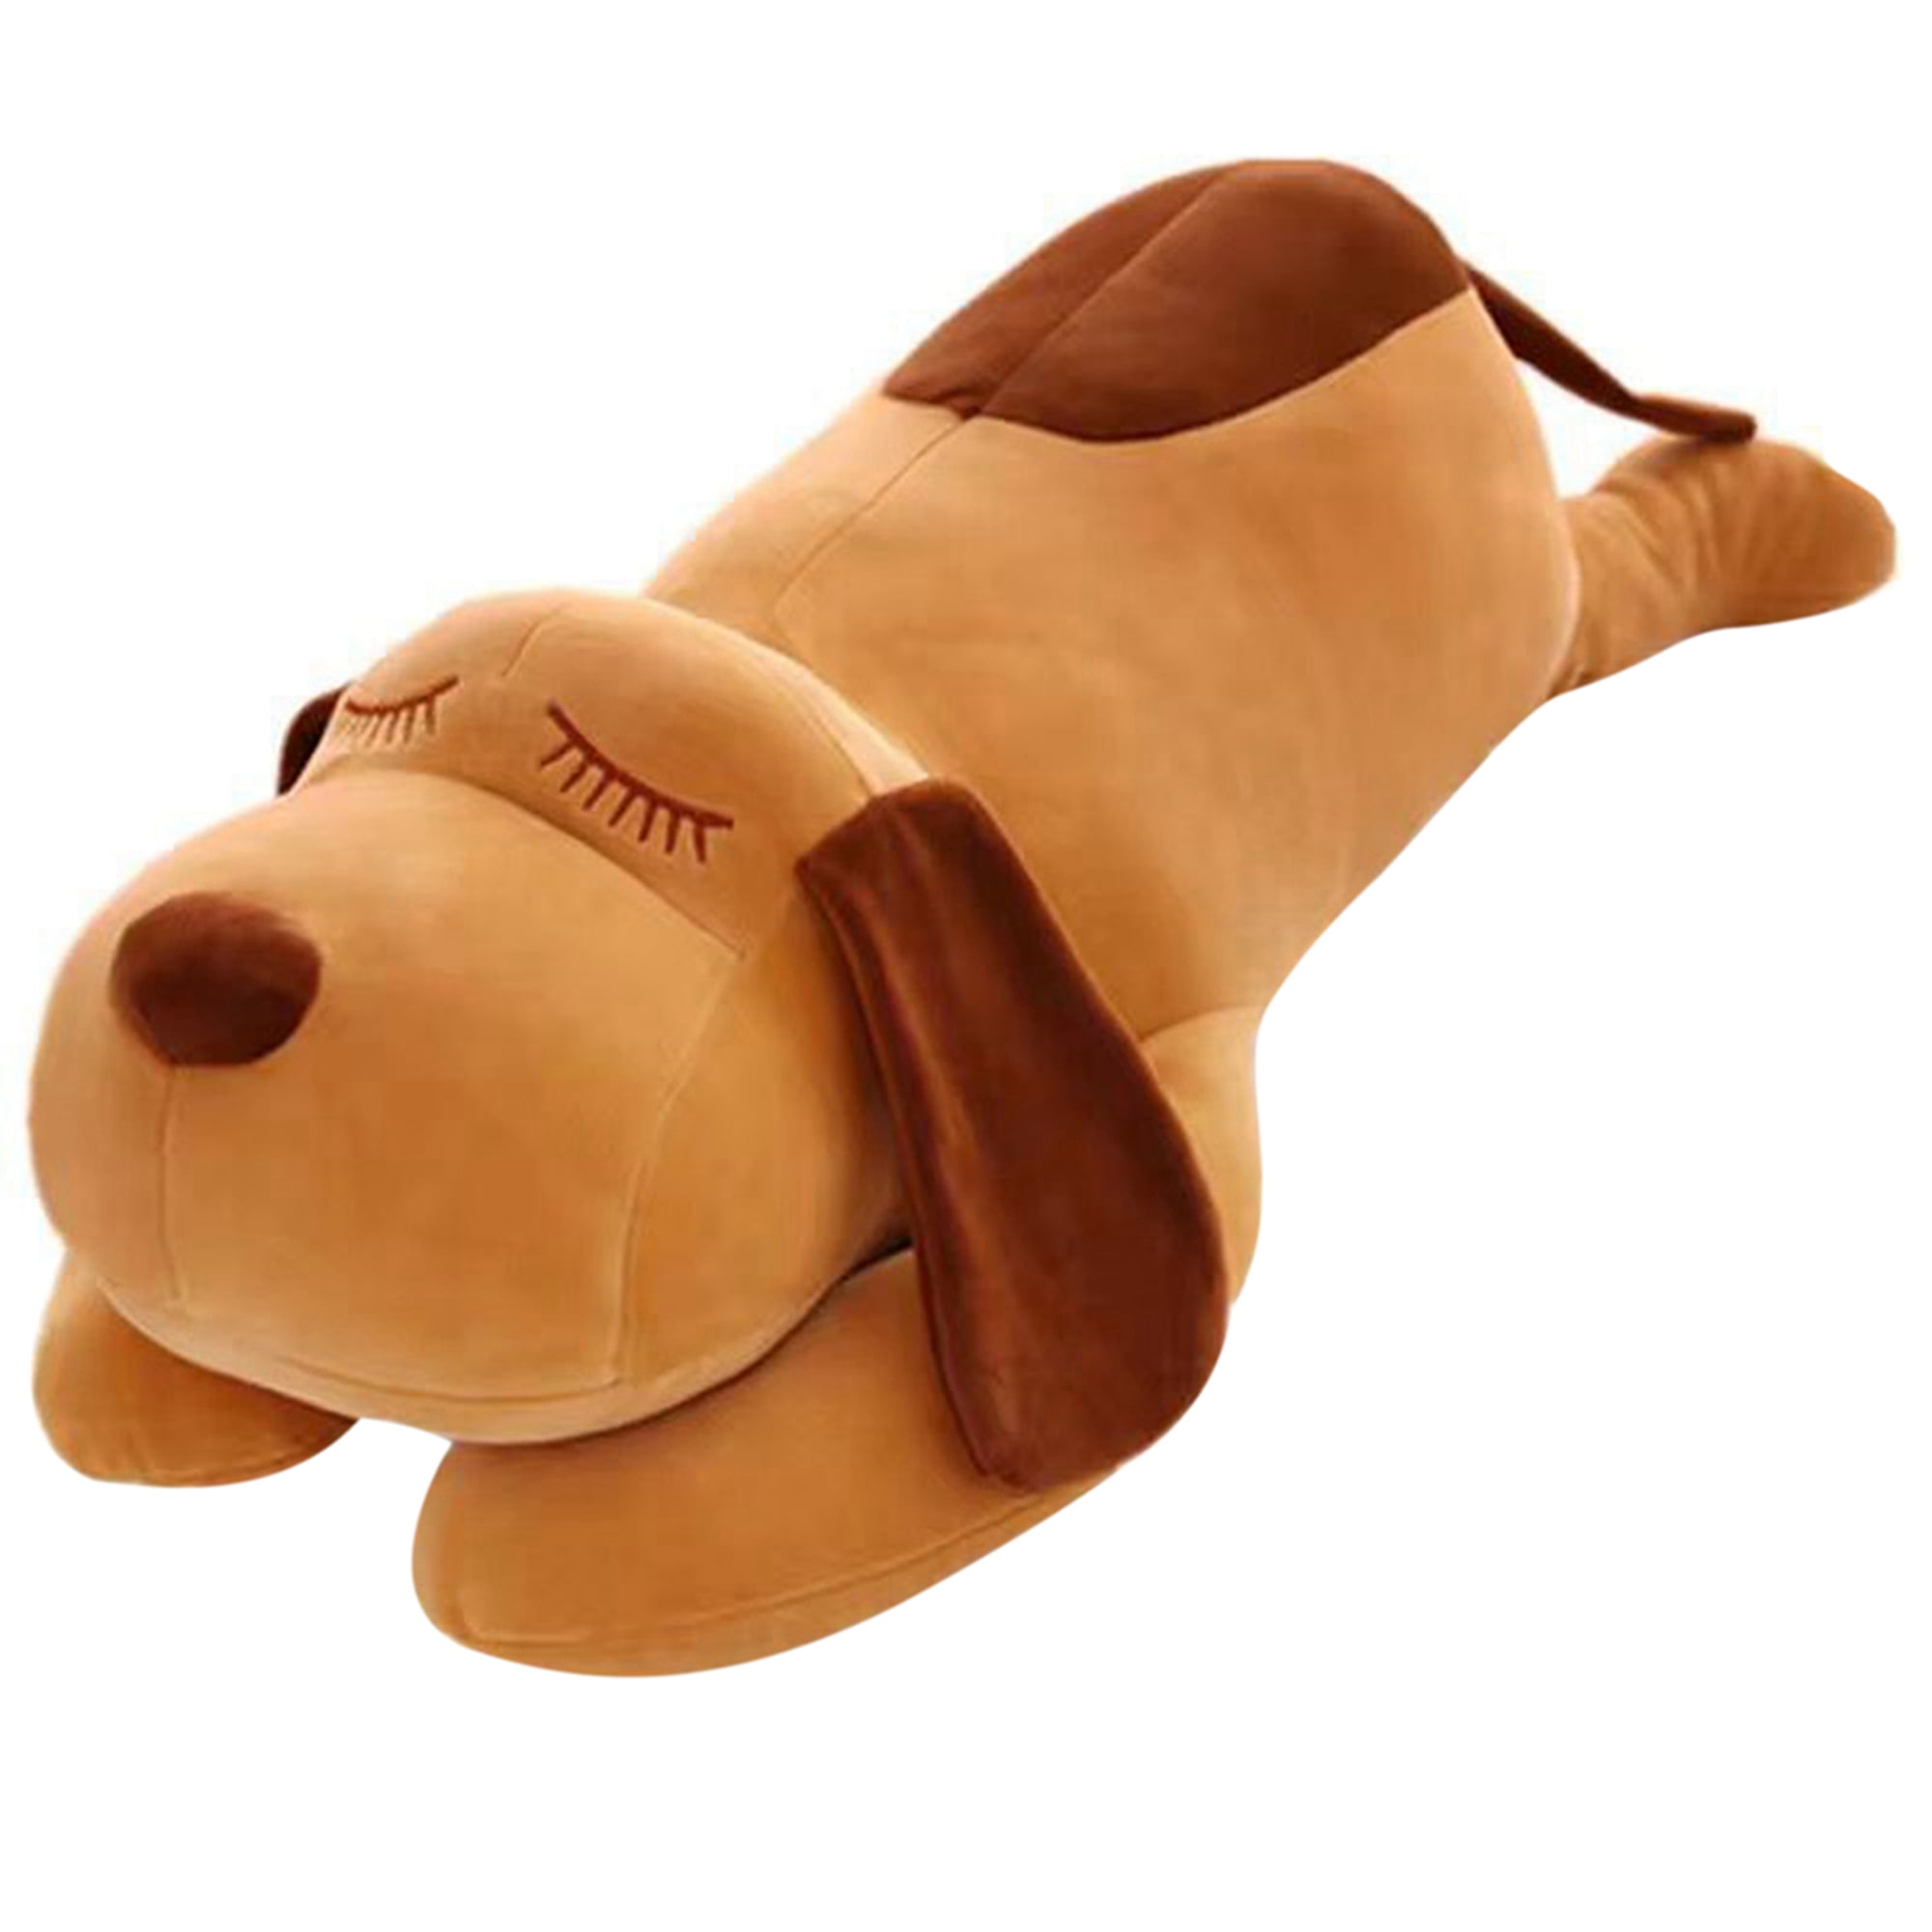 TheMogan Small Scruff Puppy Dog Pet Soft Plush Stuffed Animal Toy Beige Tan 8" 